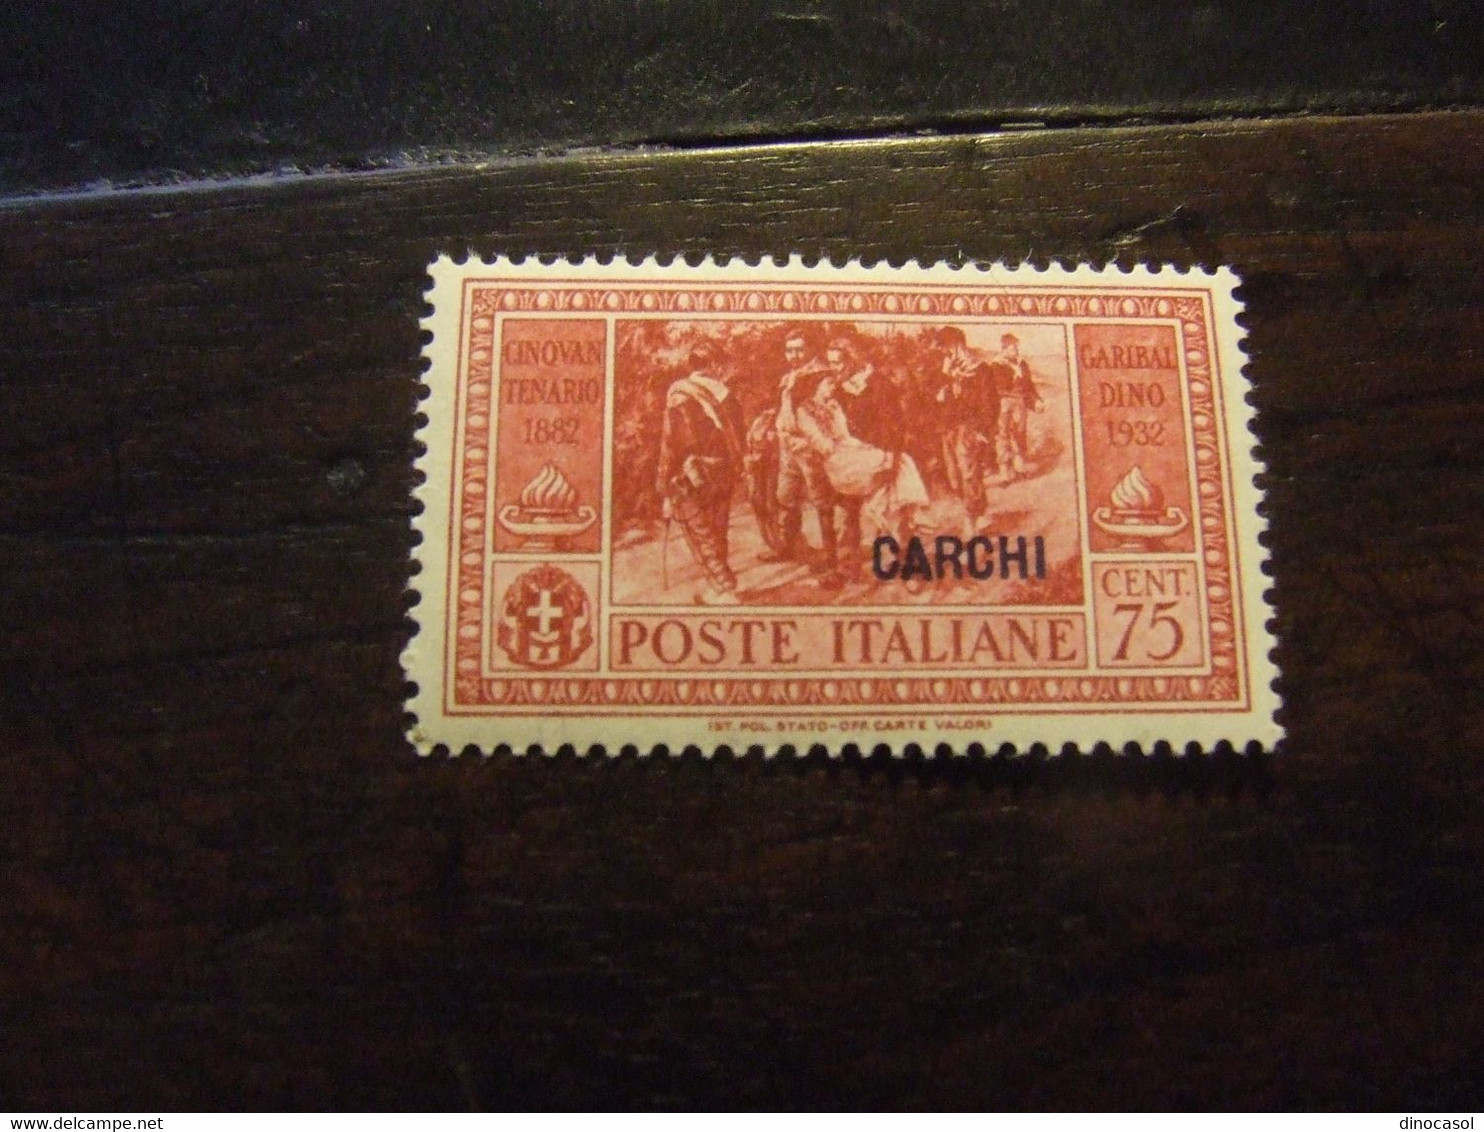 CARCHI 1932 GARIBALDI 75 C NUOVO * - Egée (Carchi)